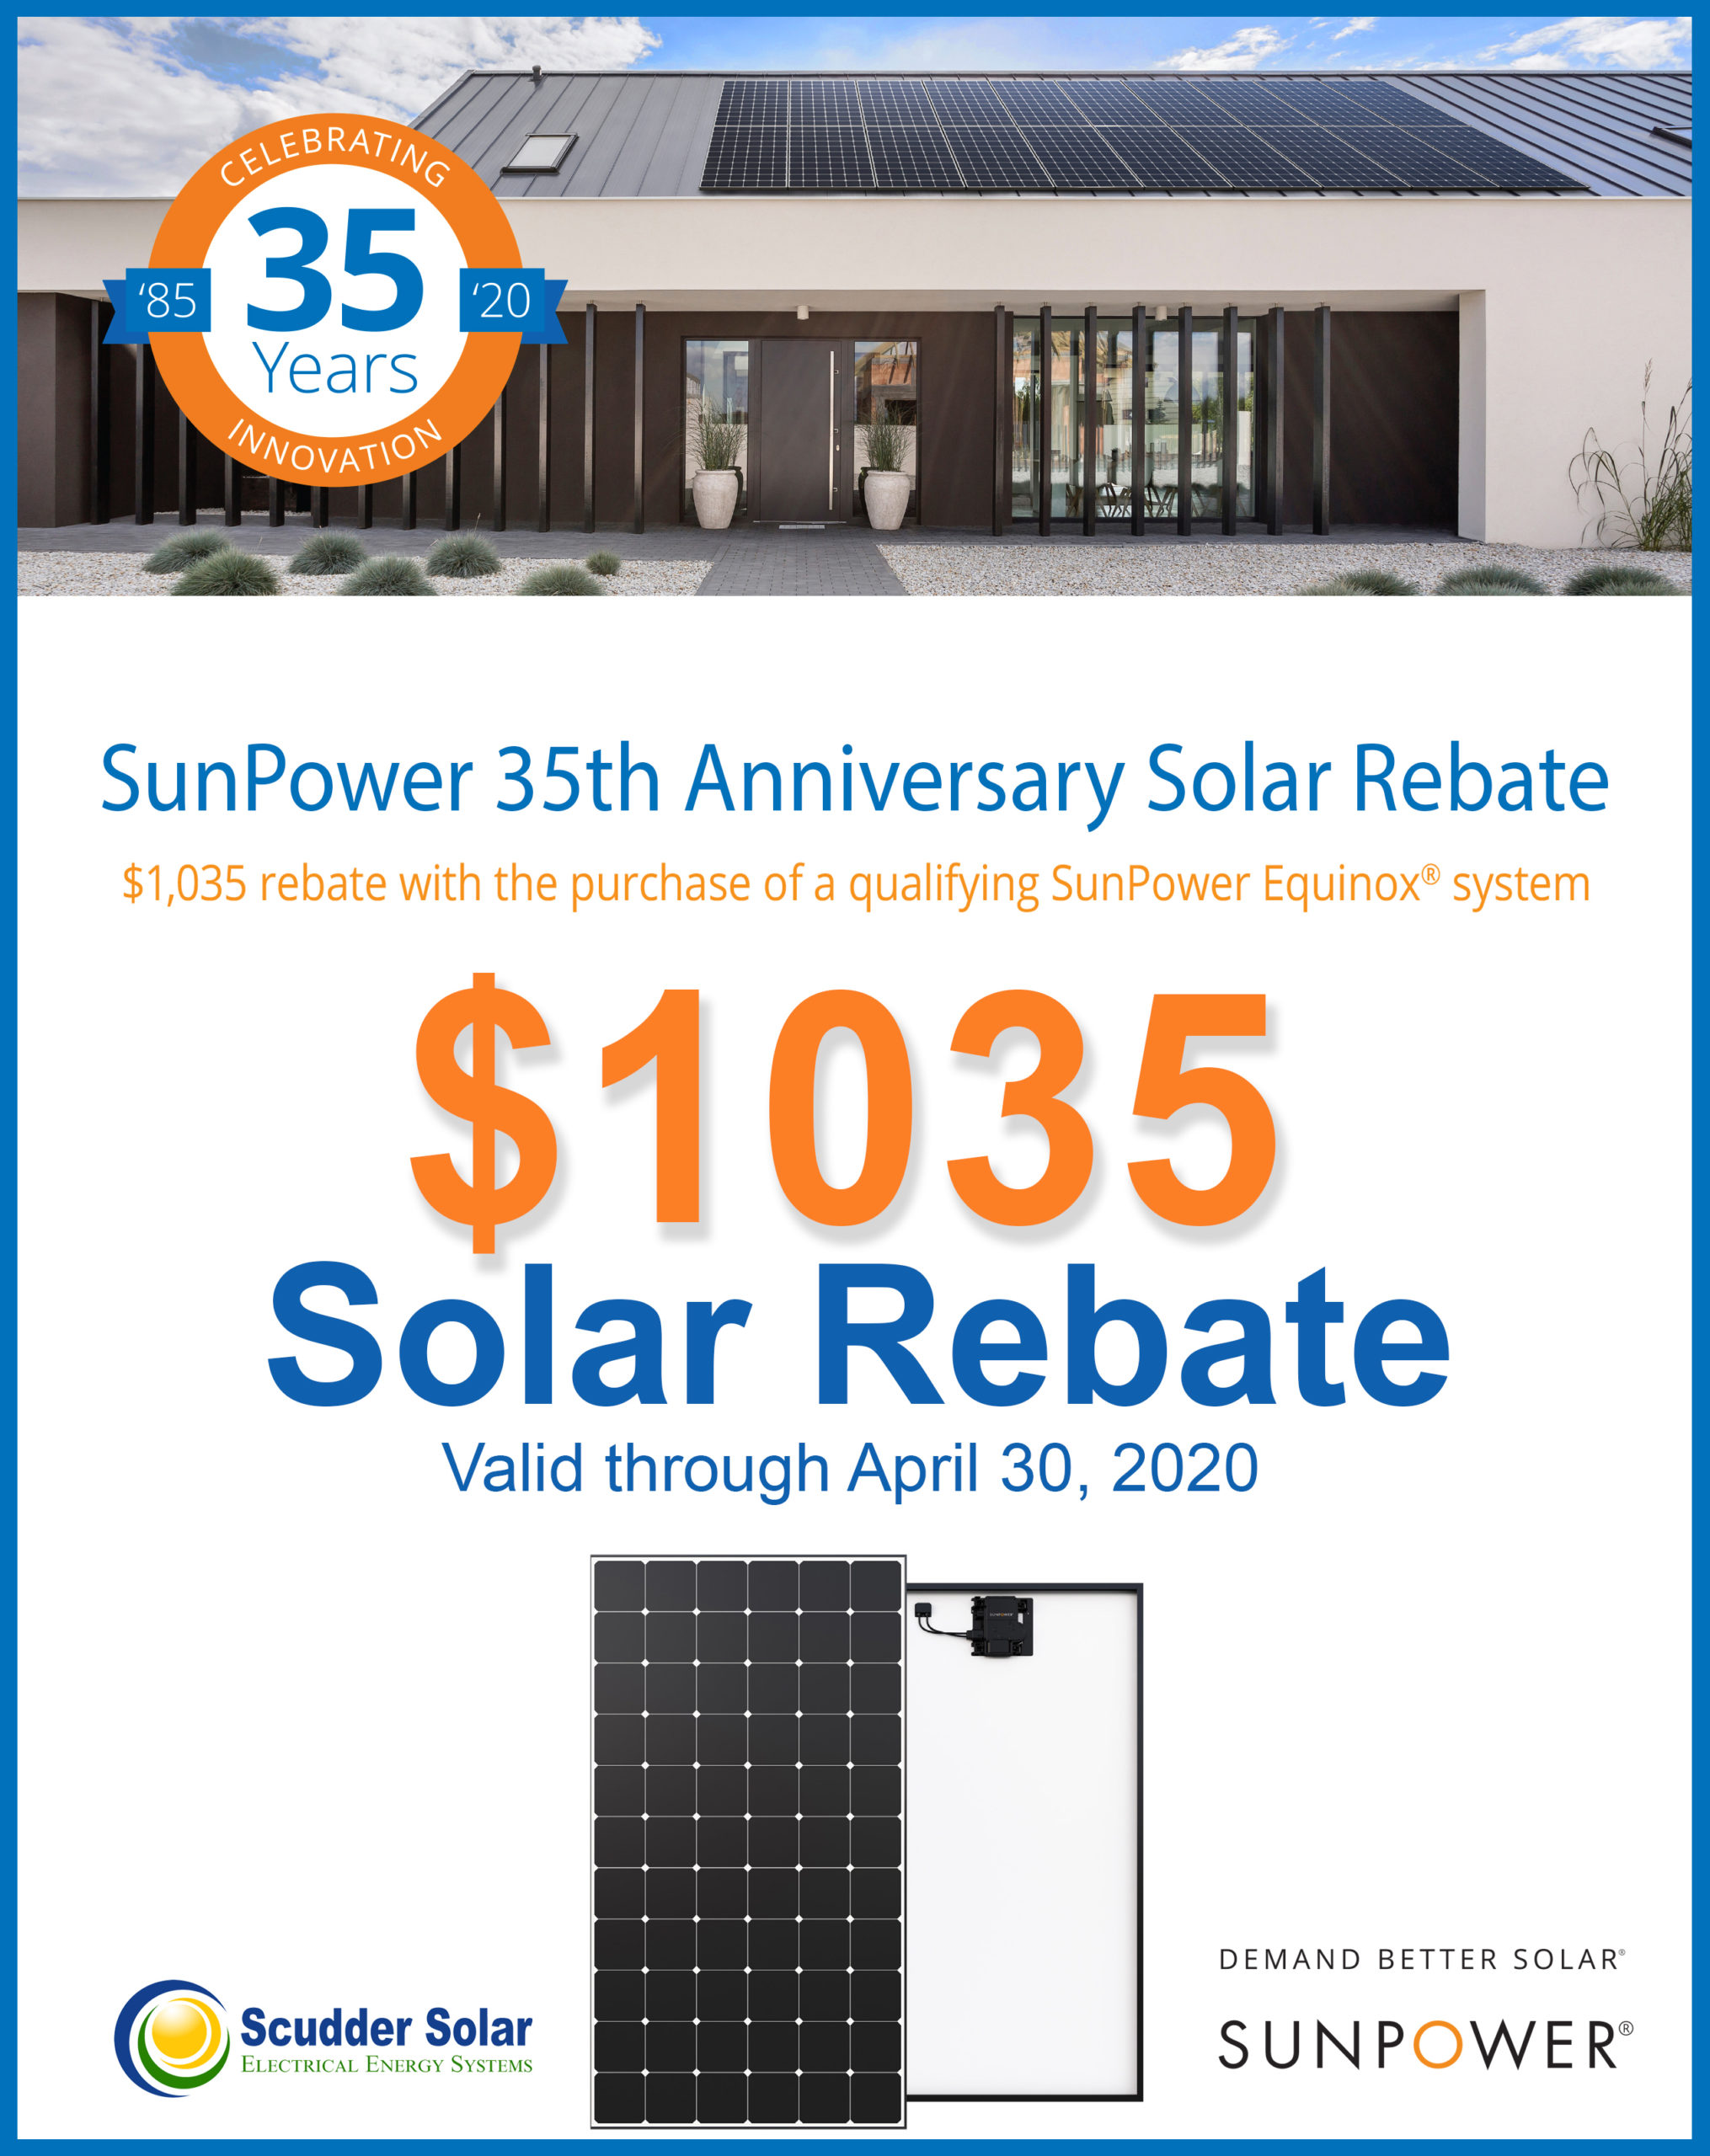 sunpower-solar-rebate-scudder-solar-energy-systems-blog